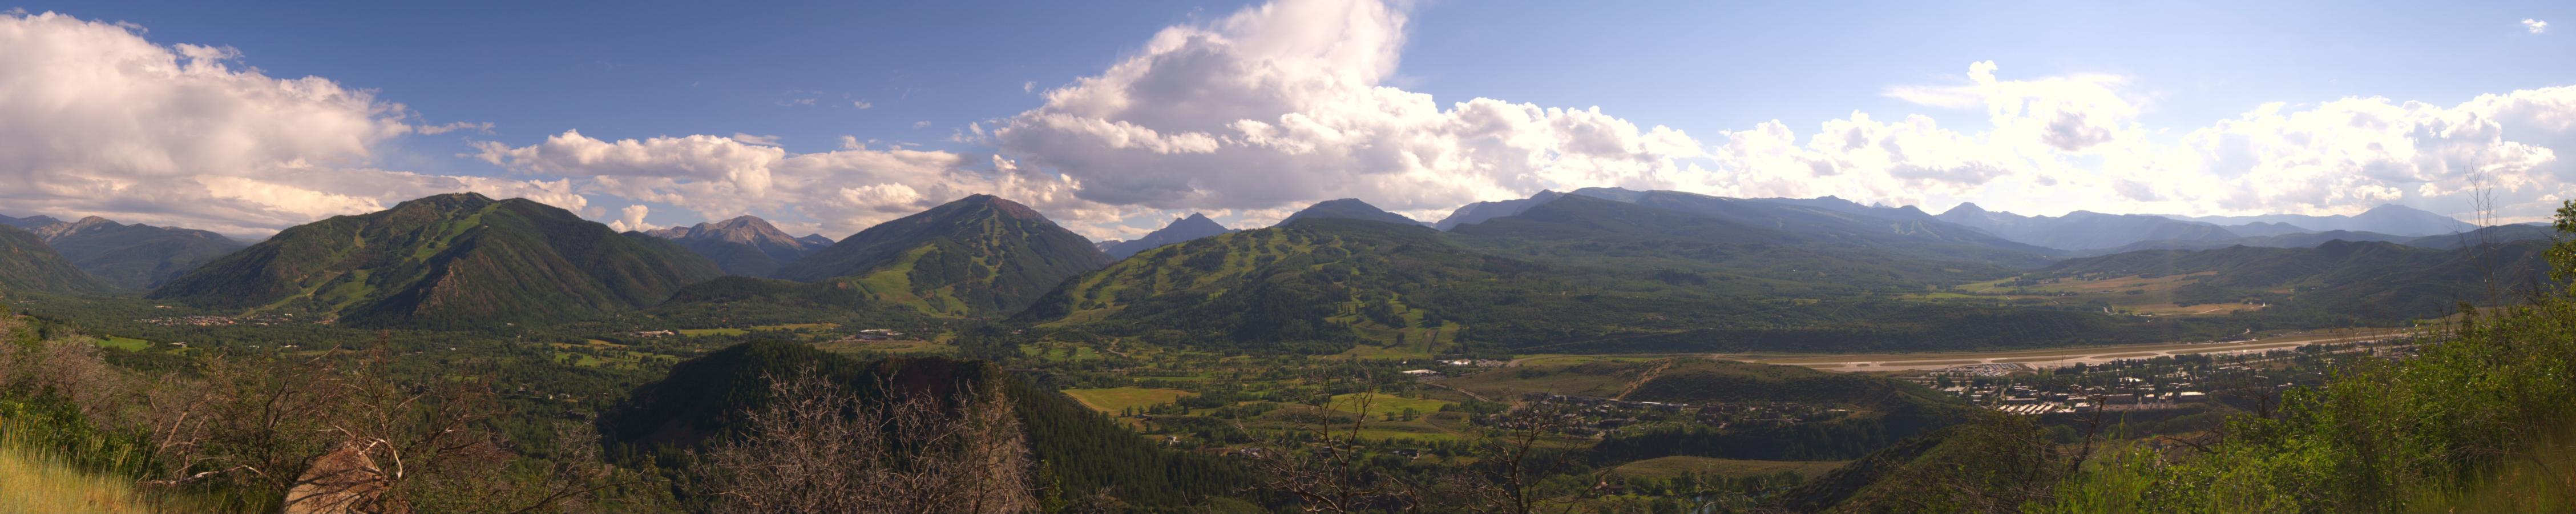 Webcam Aspen Highlands: Power of four